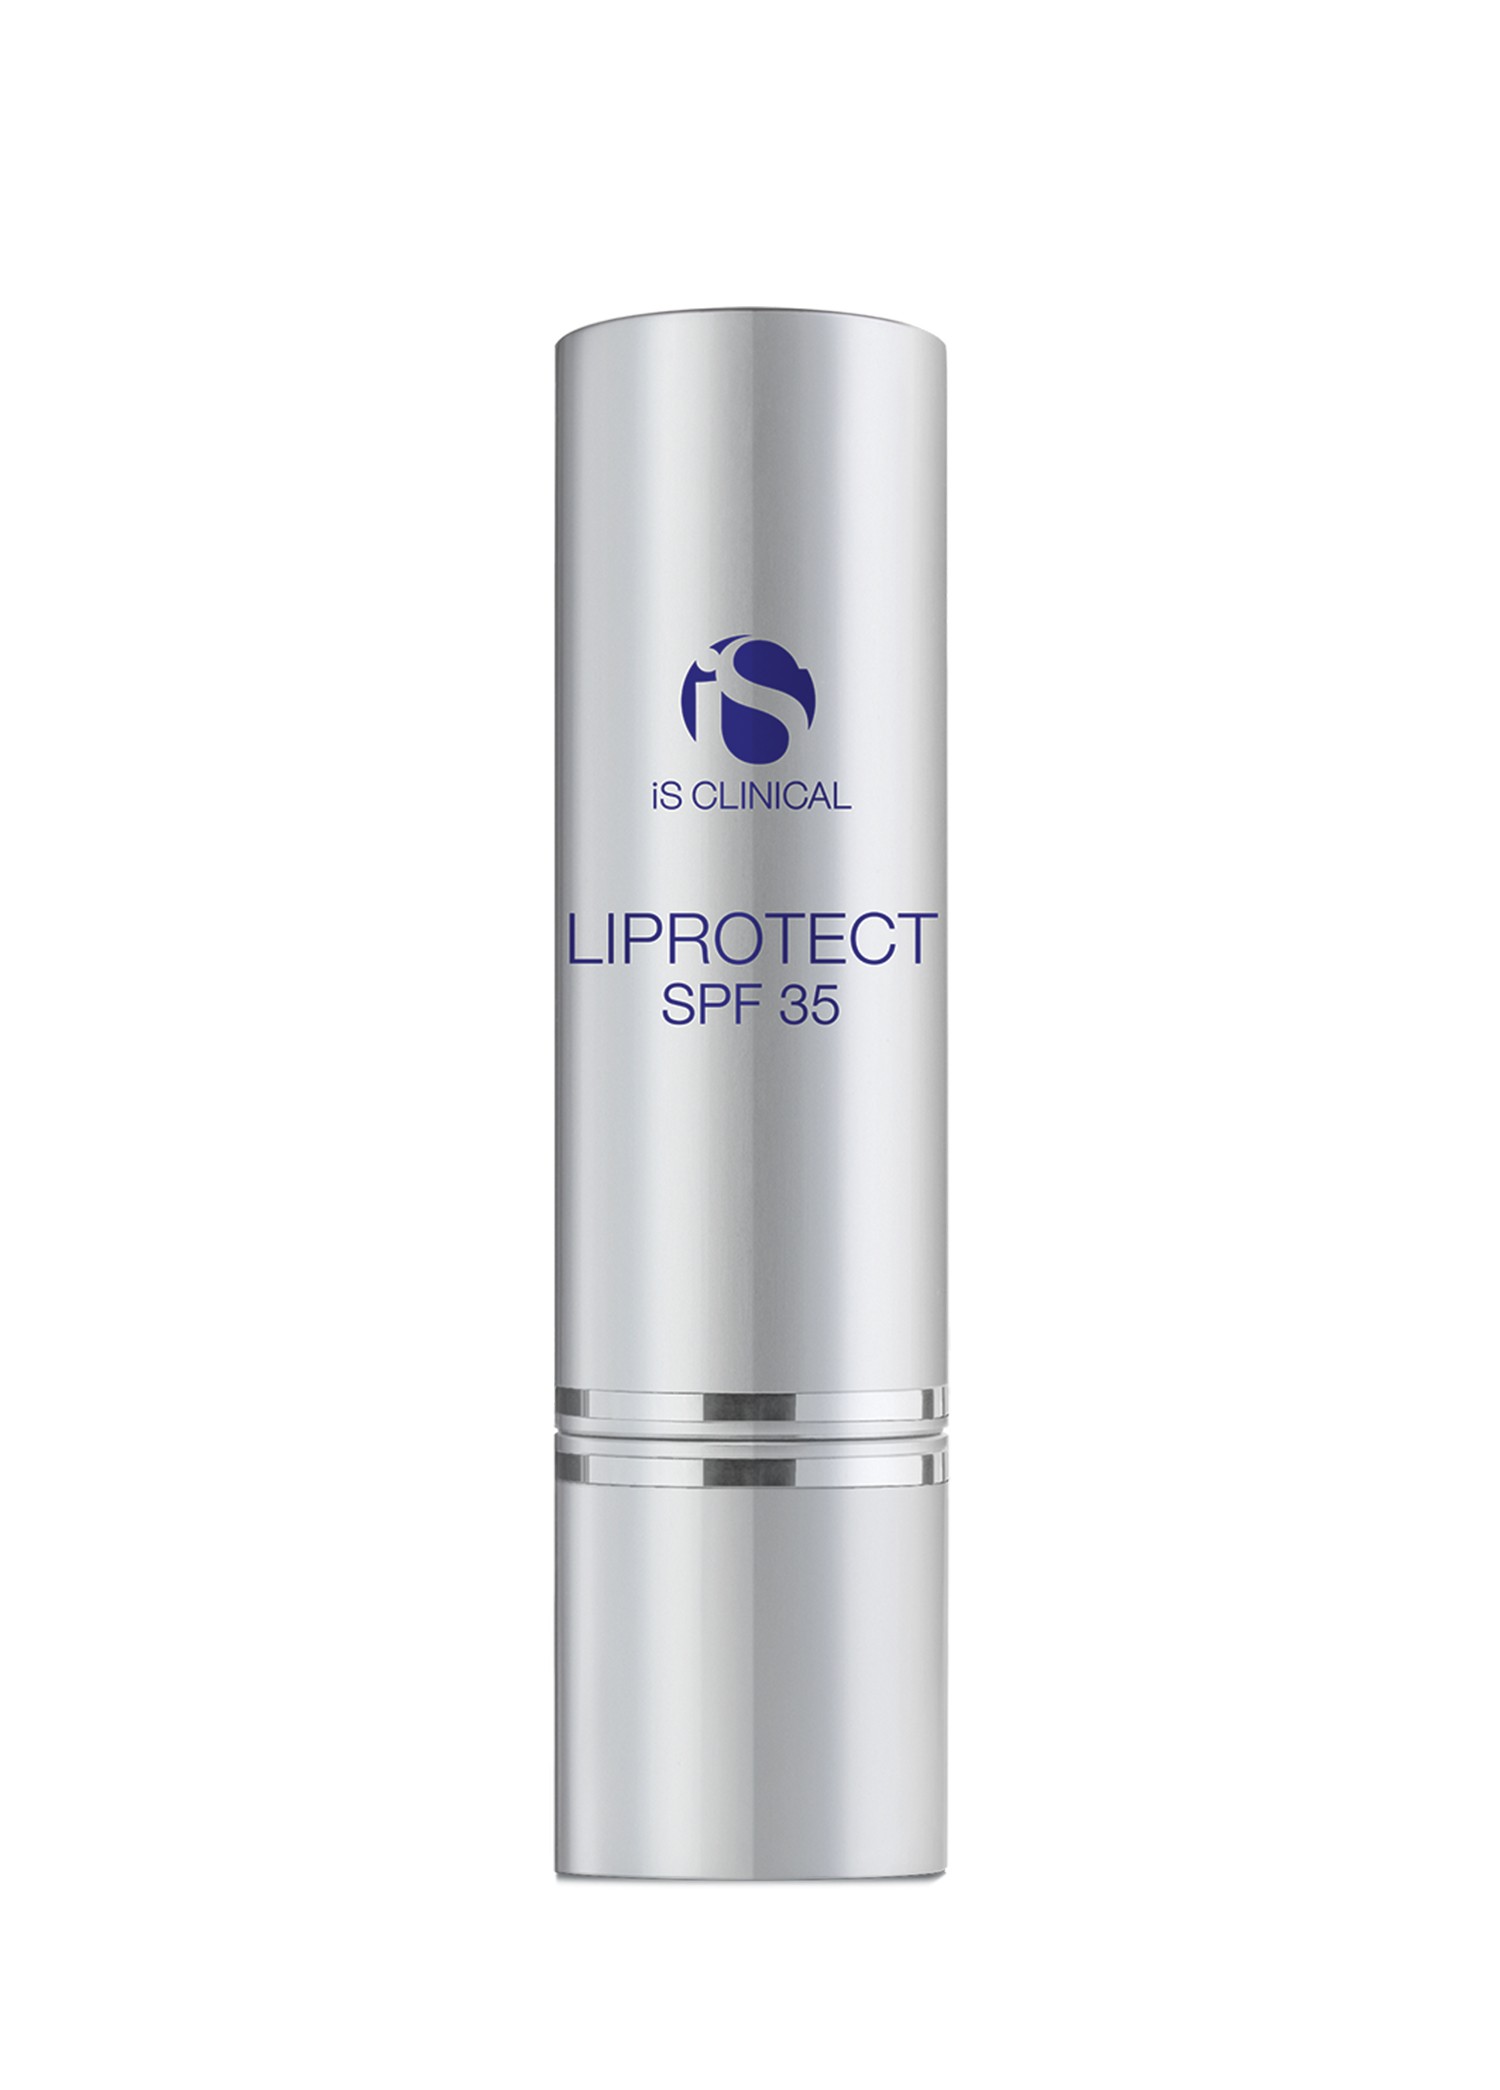 Liprotect SPF 35 5 g